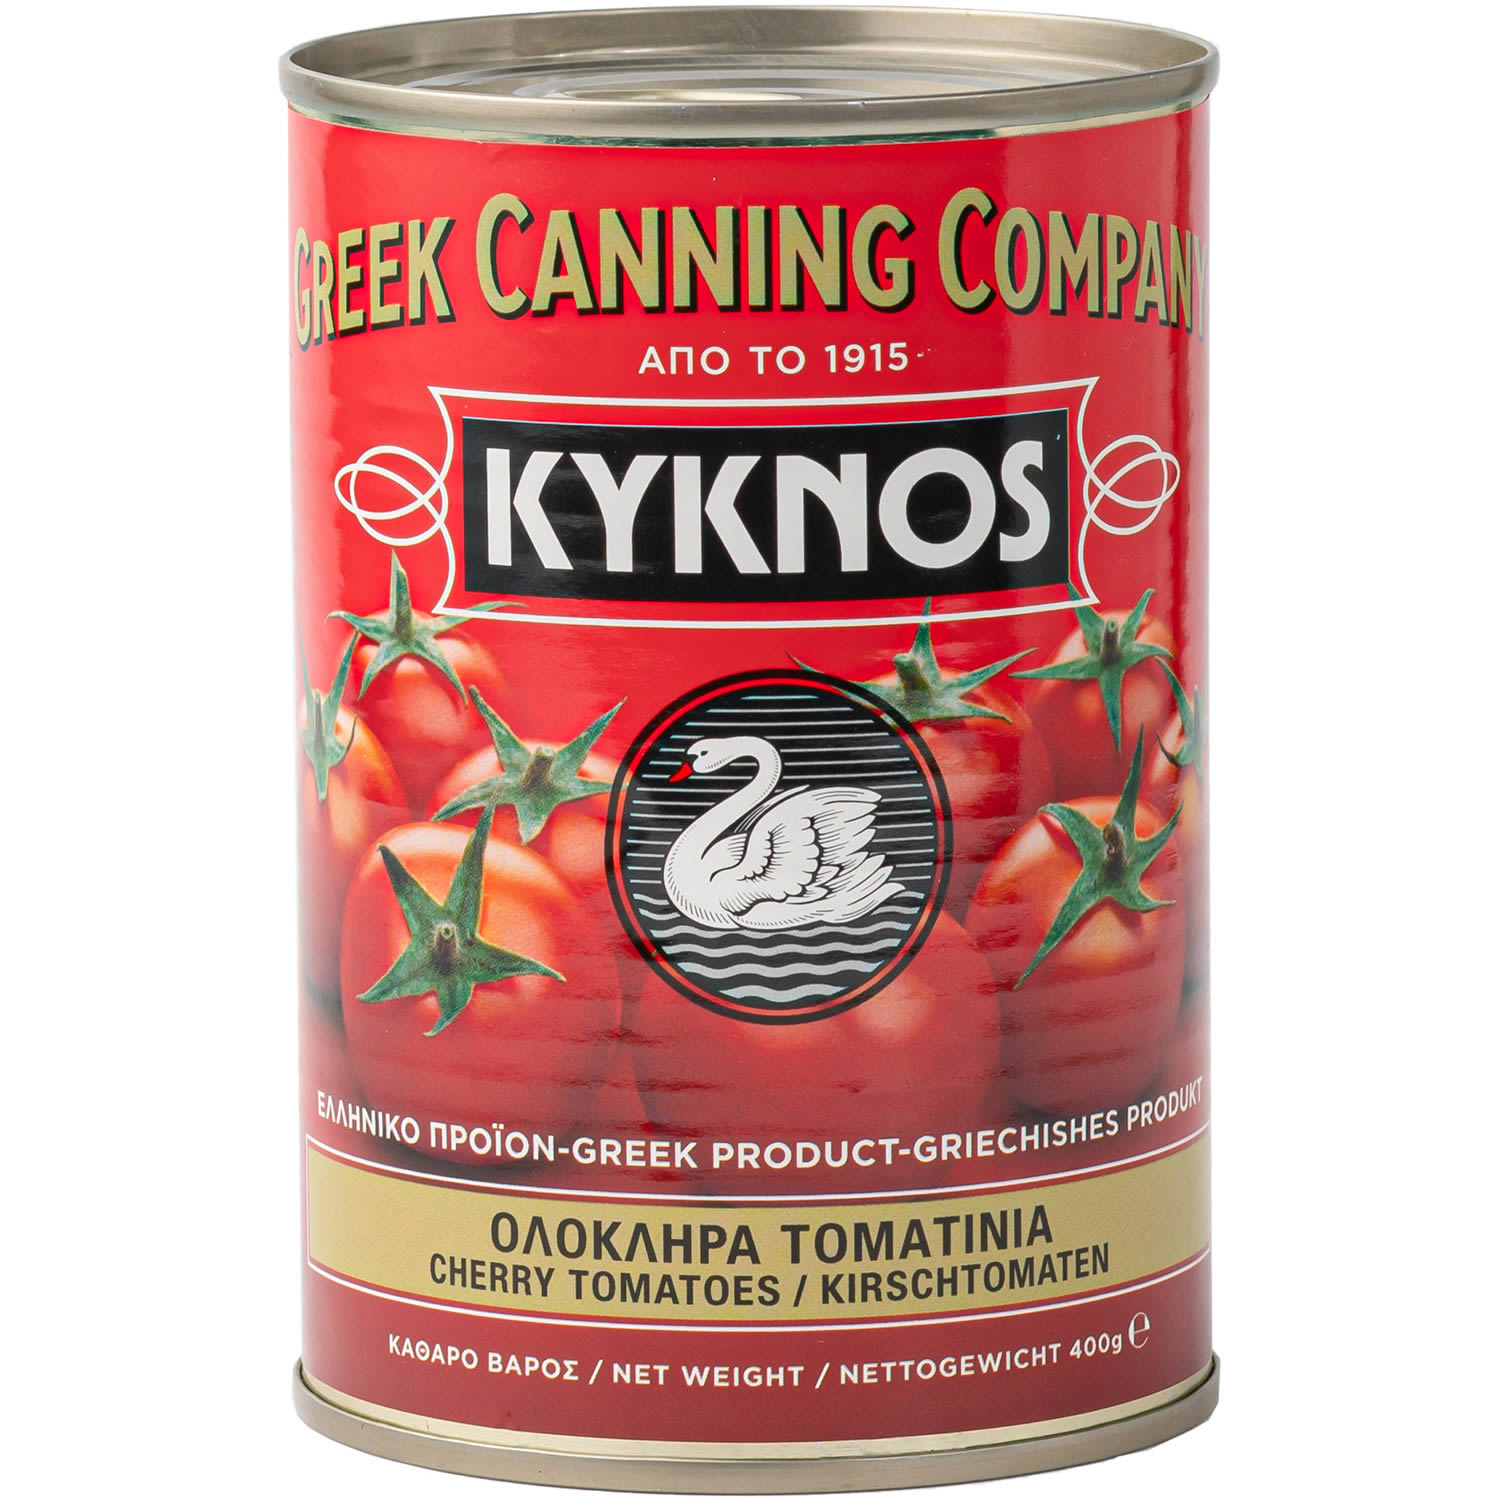 Kyknos - Kirschtomaten (Cherrytomaten) in Tomatensaft eingelegt 400 g